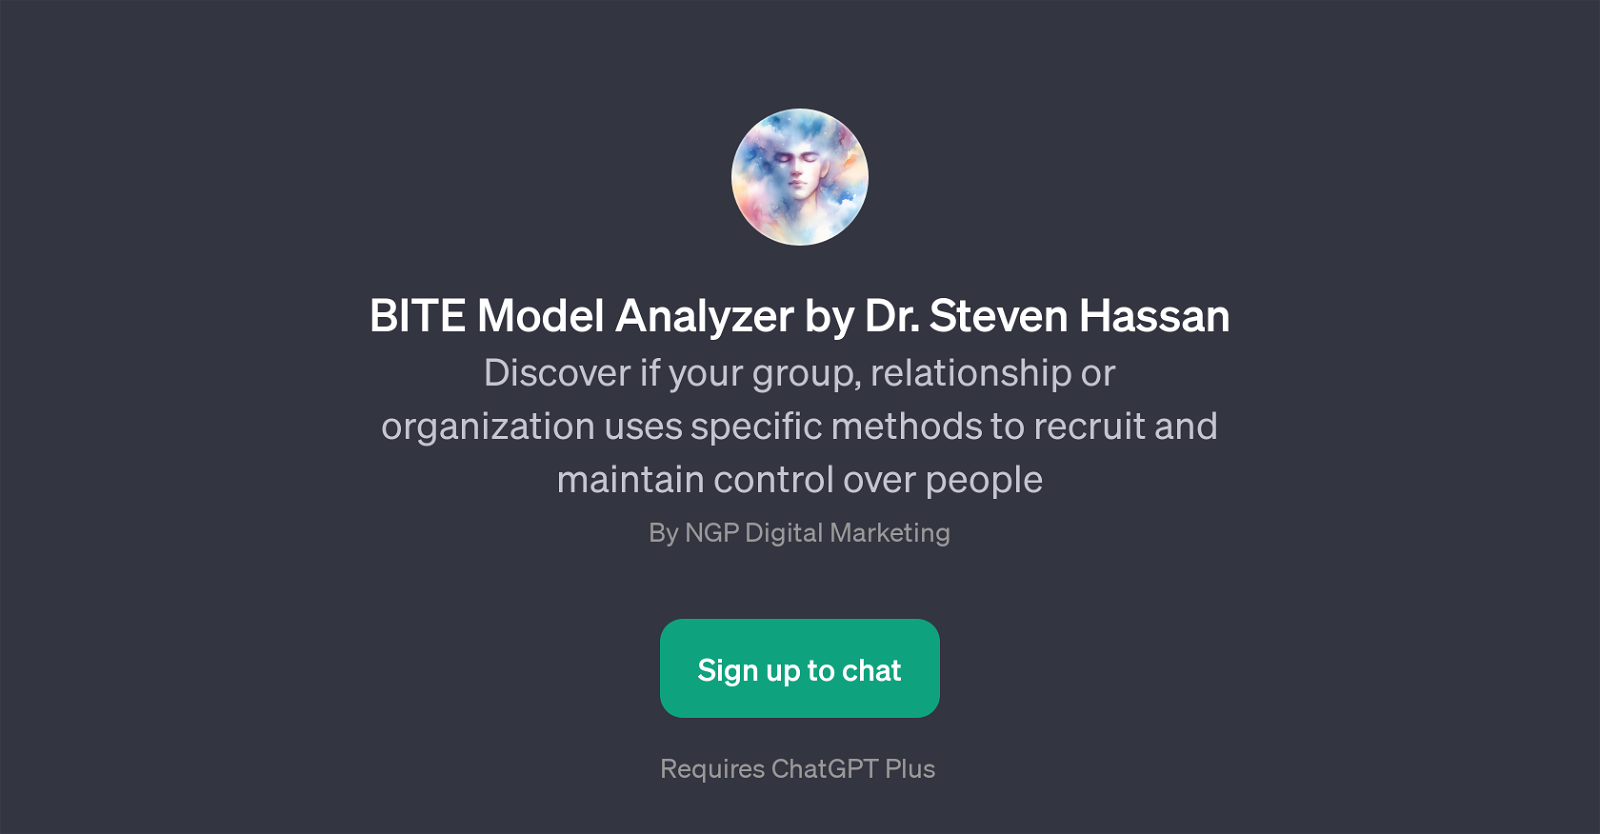 BITE Model Analyzer by Dr. Steven Hassan website